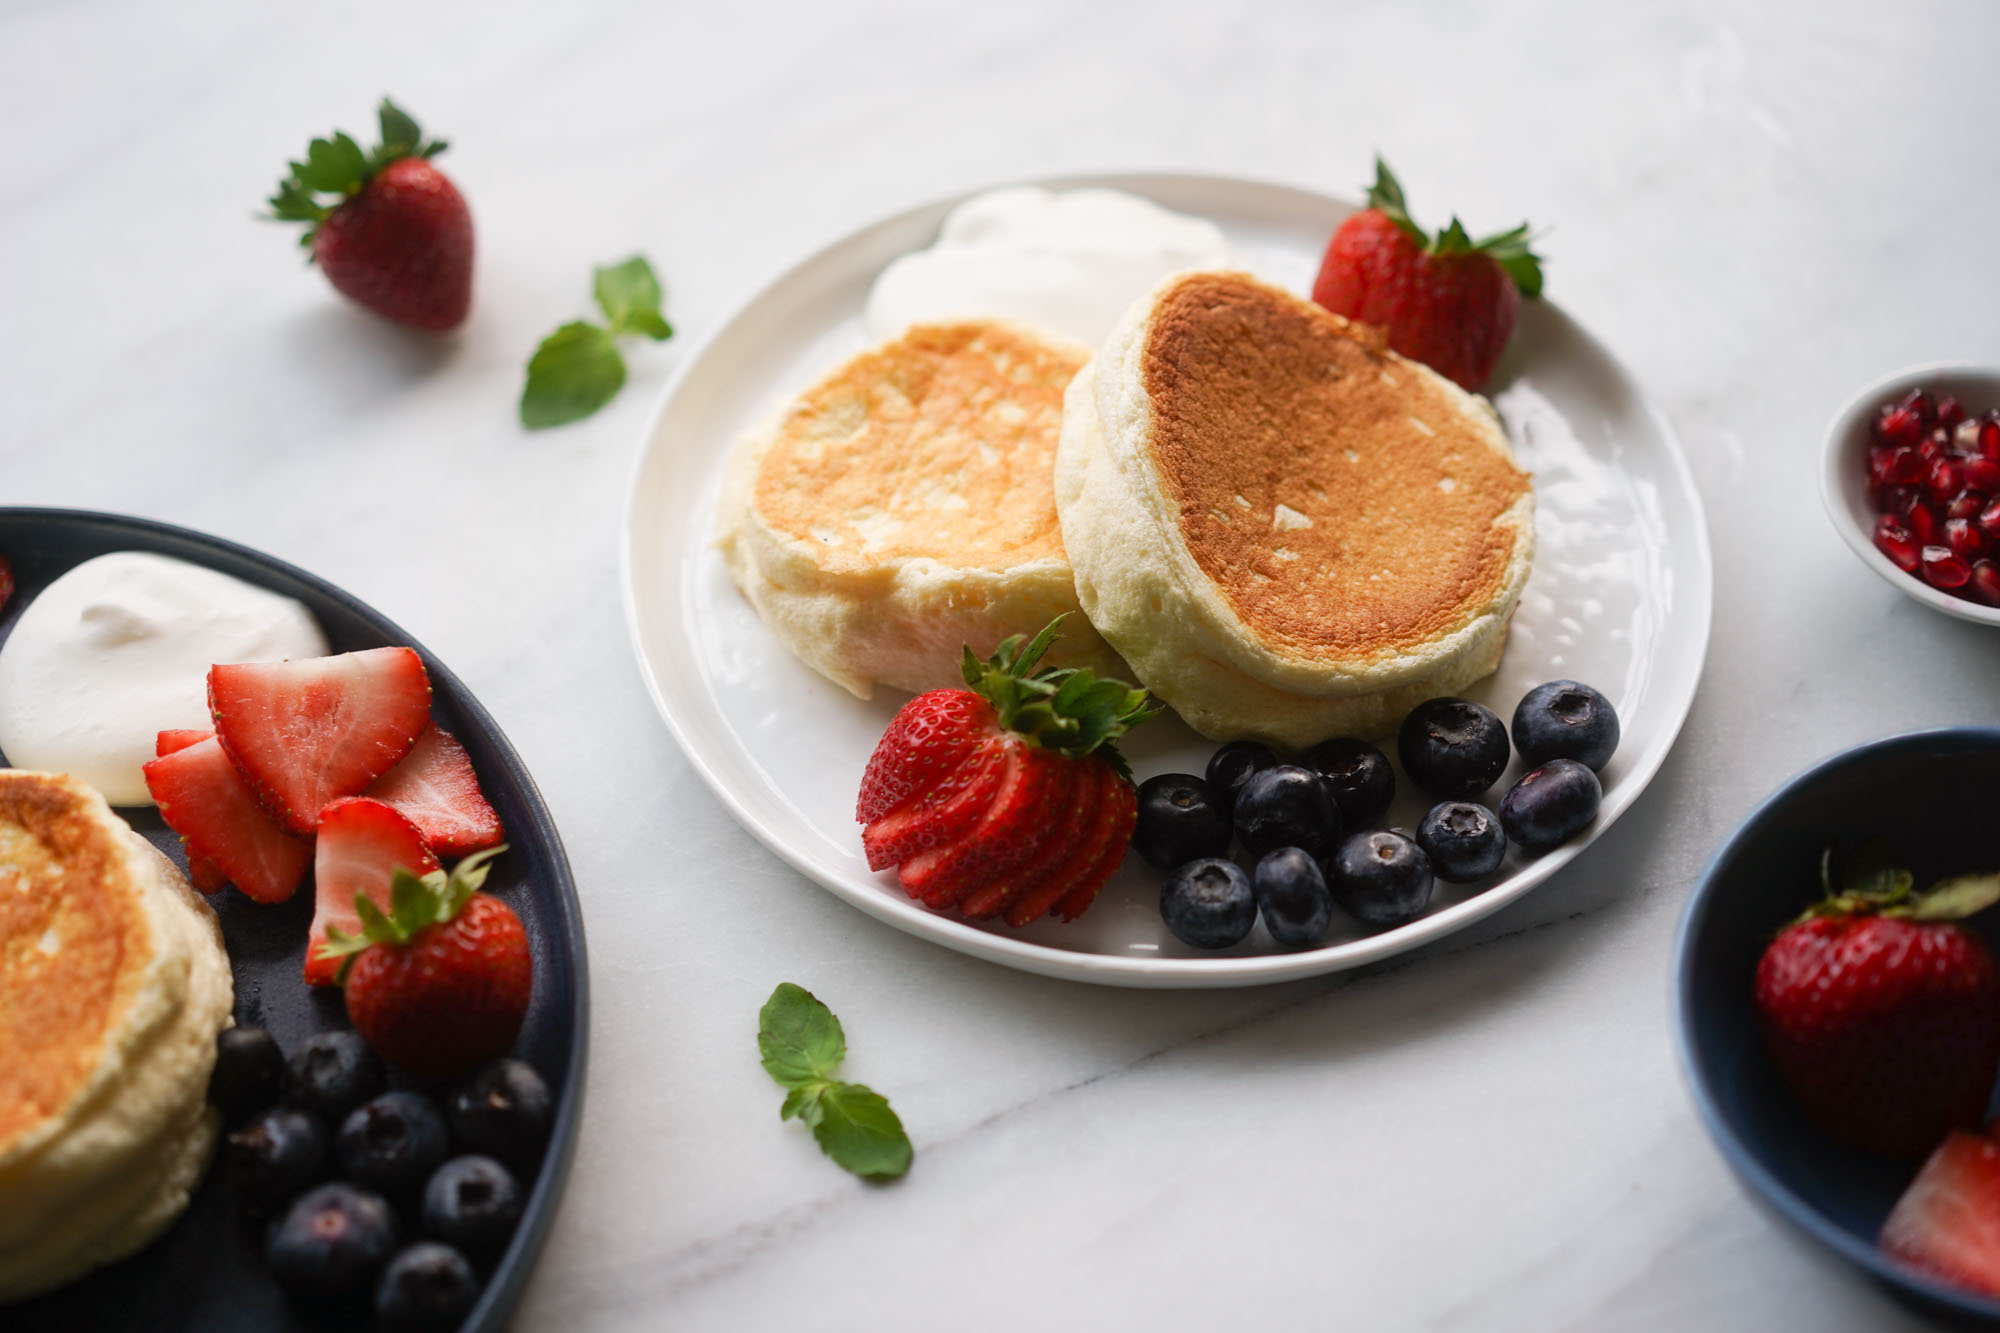 https://www.hungryhuy.com/wp-content/uploads/souffle-pancakes-w-fruit.jpg